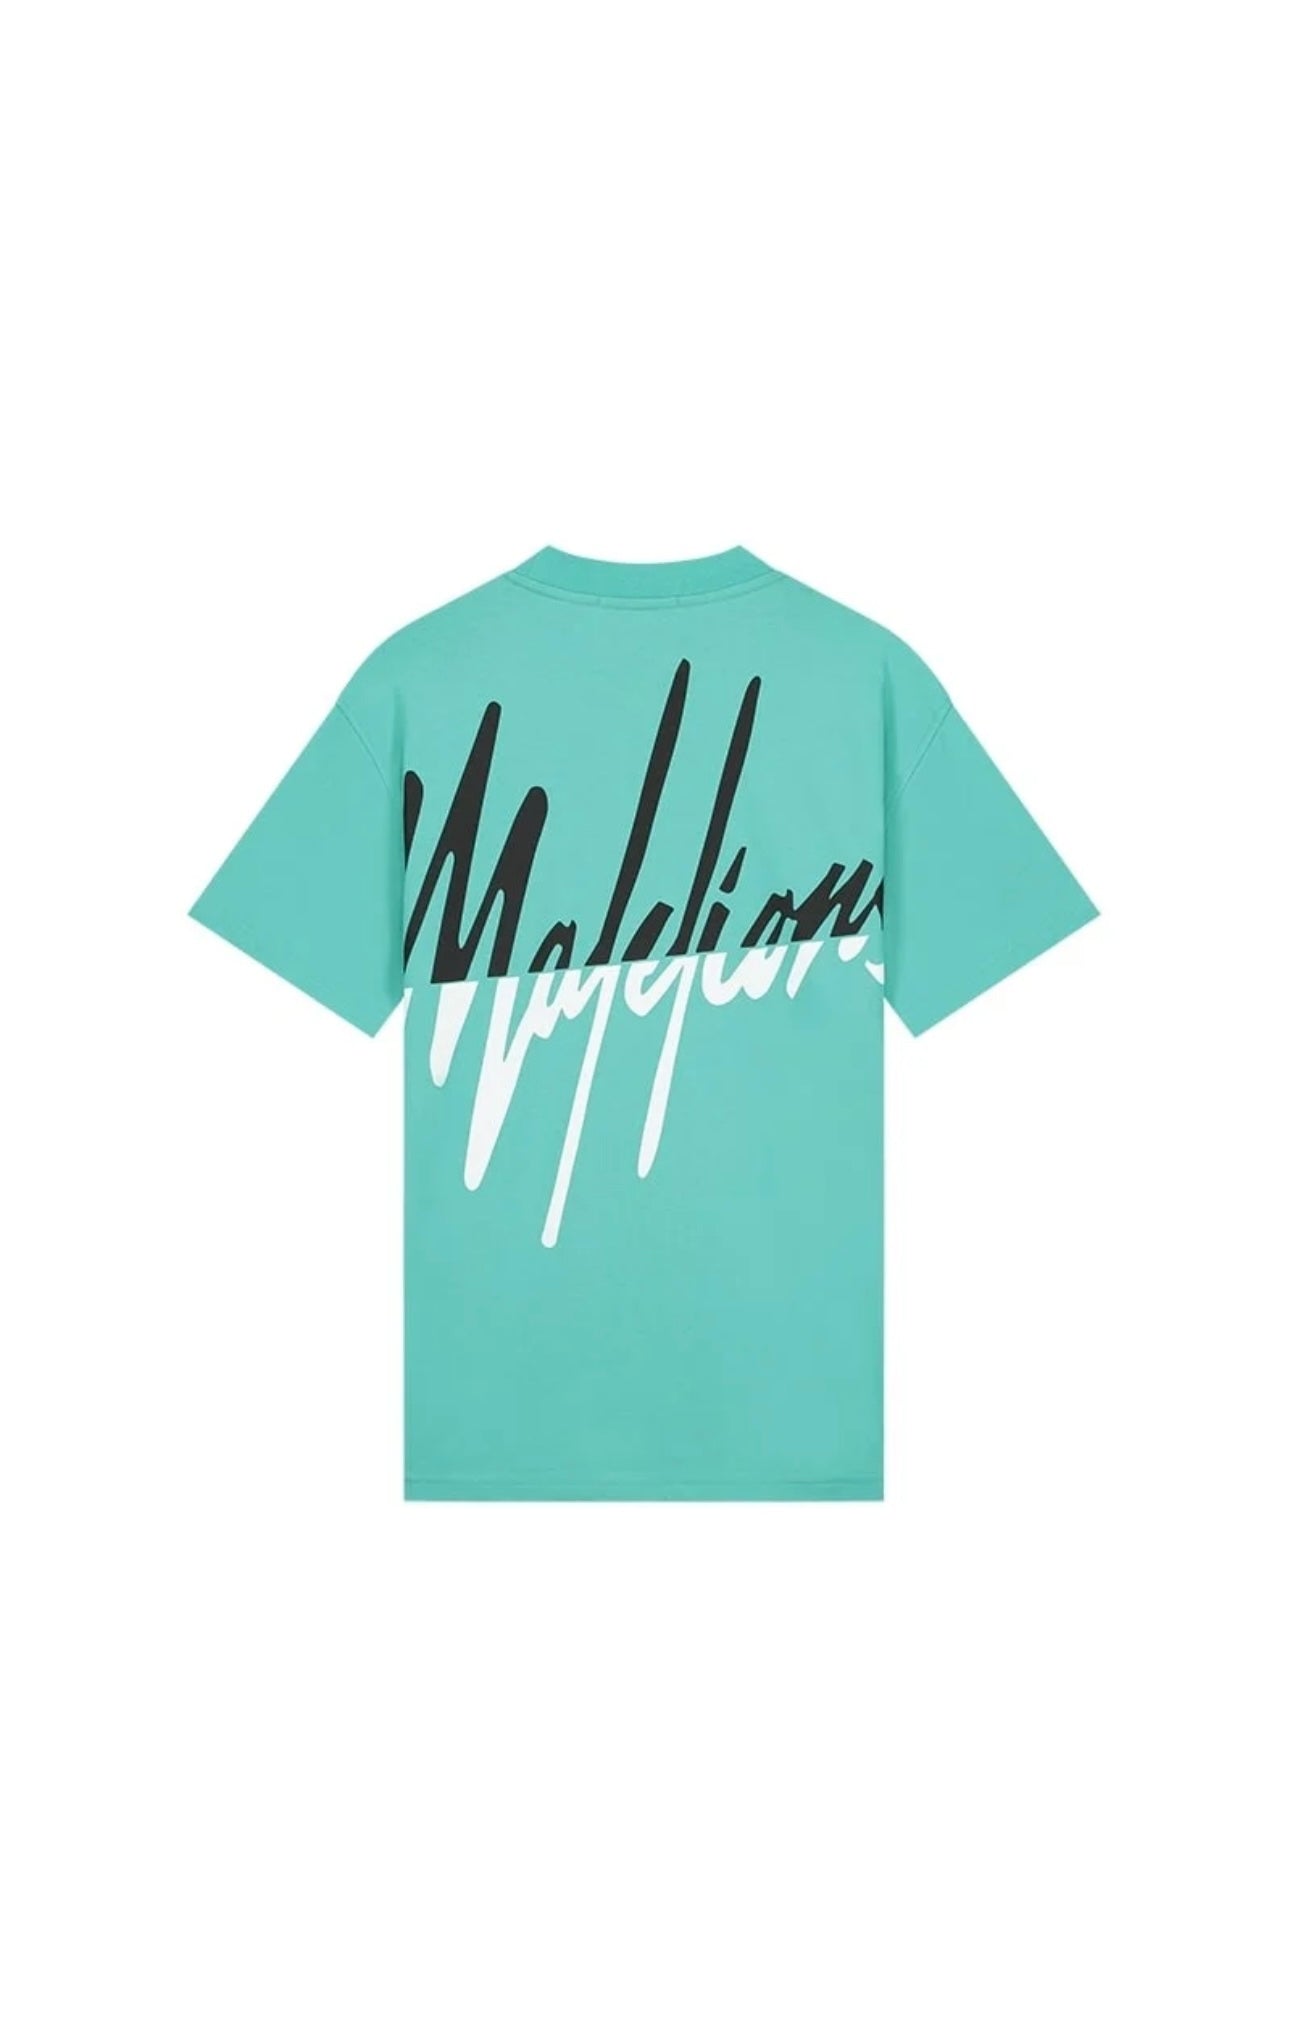 Malelions men split t-shirt - turquoise/black